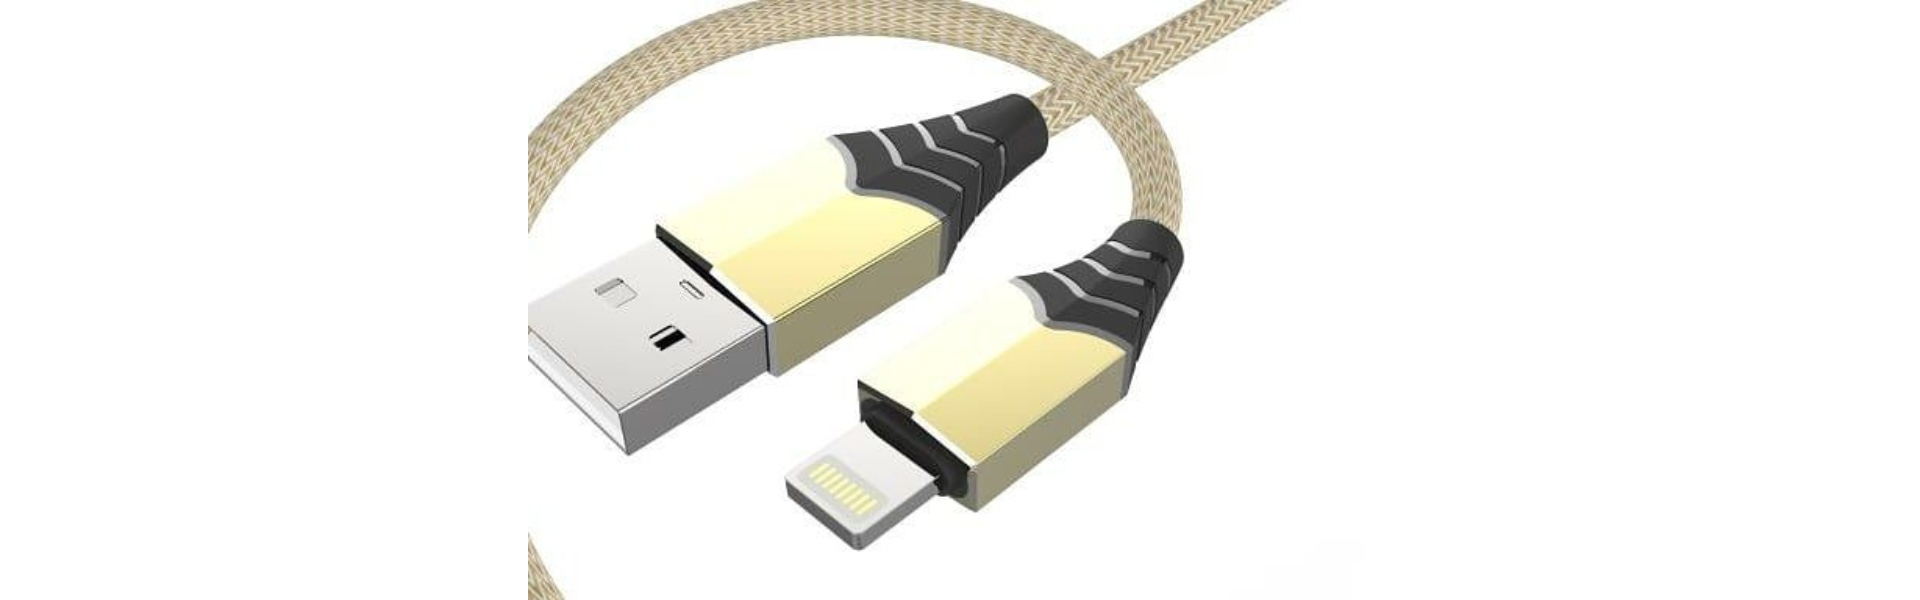 USB-Kabel, USB-Kabel, Datenkabel, Datenkabel,Dong Guan Rong Pin Electronic Technology Co.Ltd